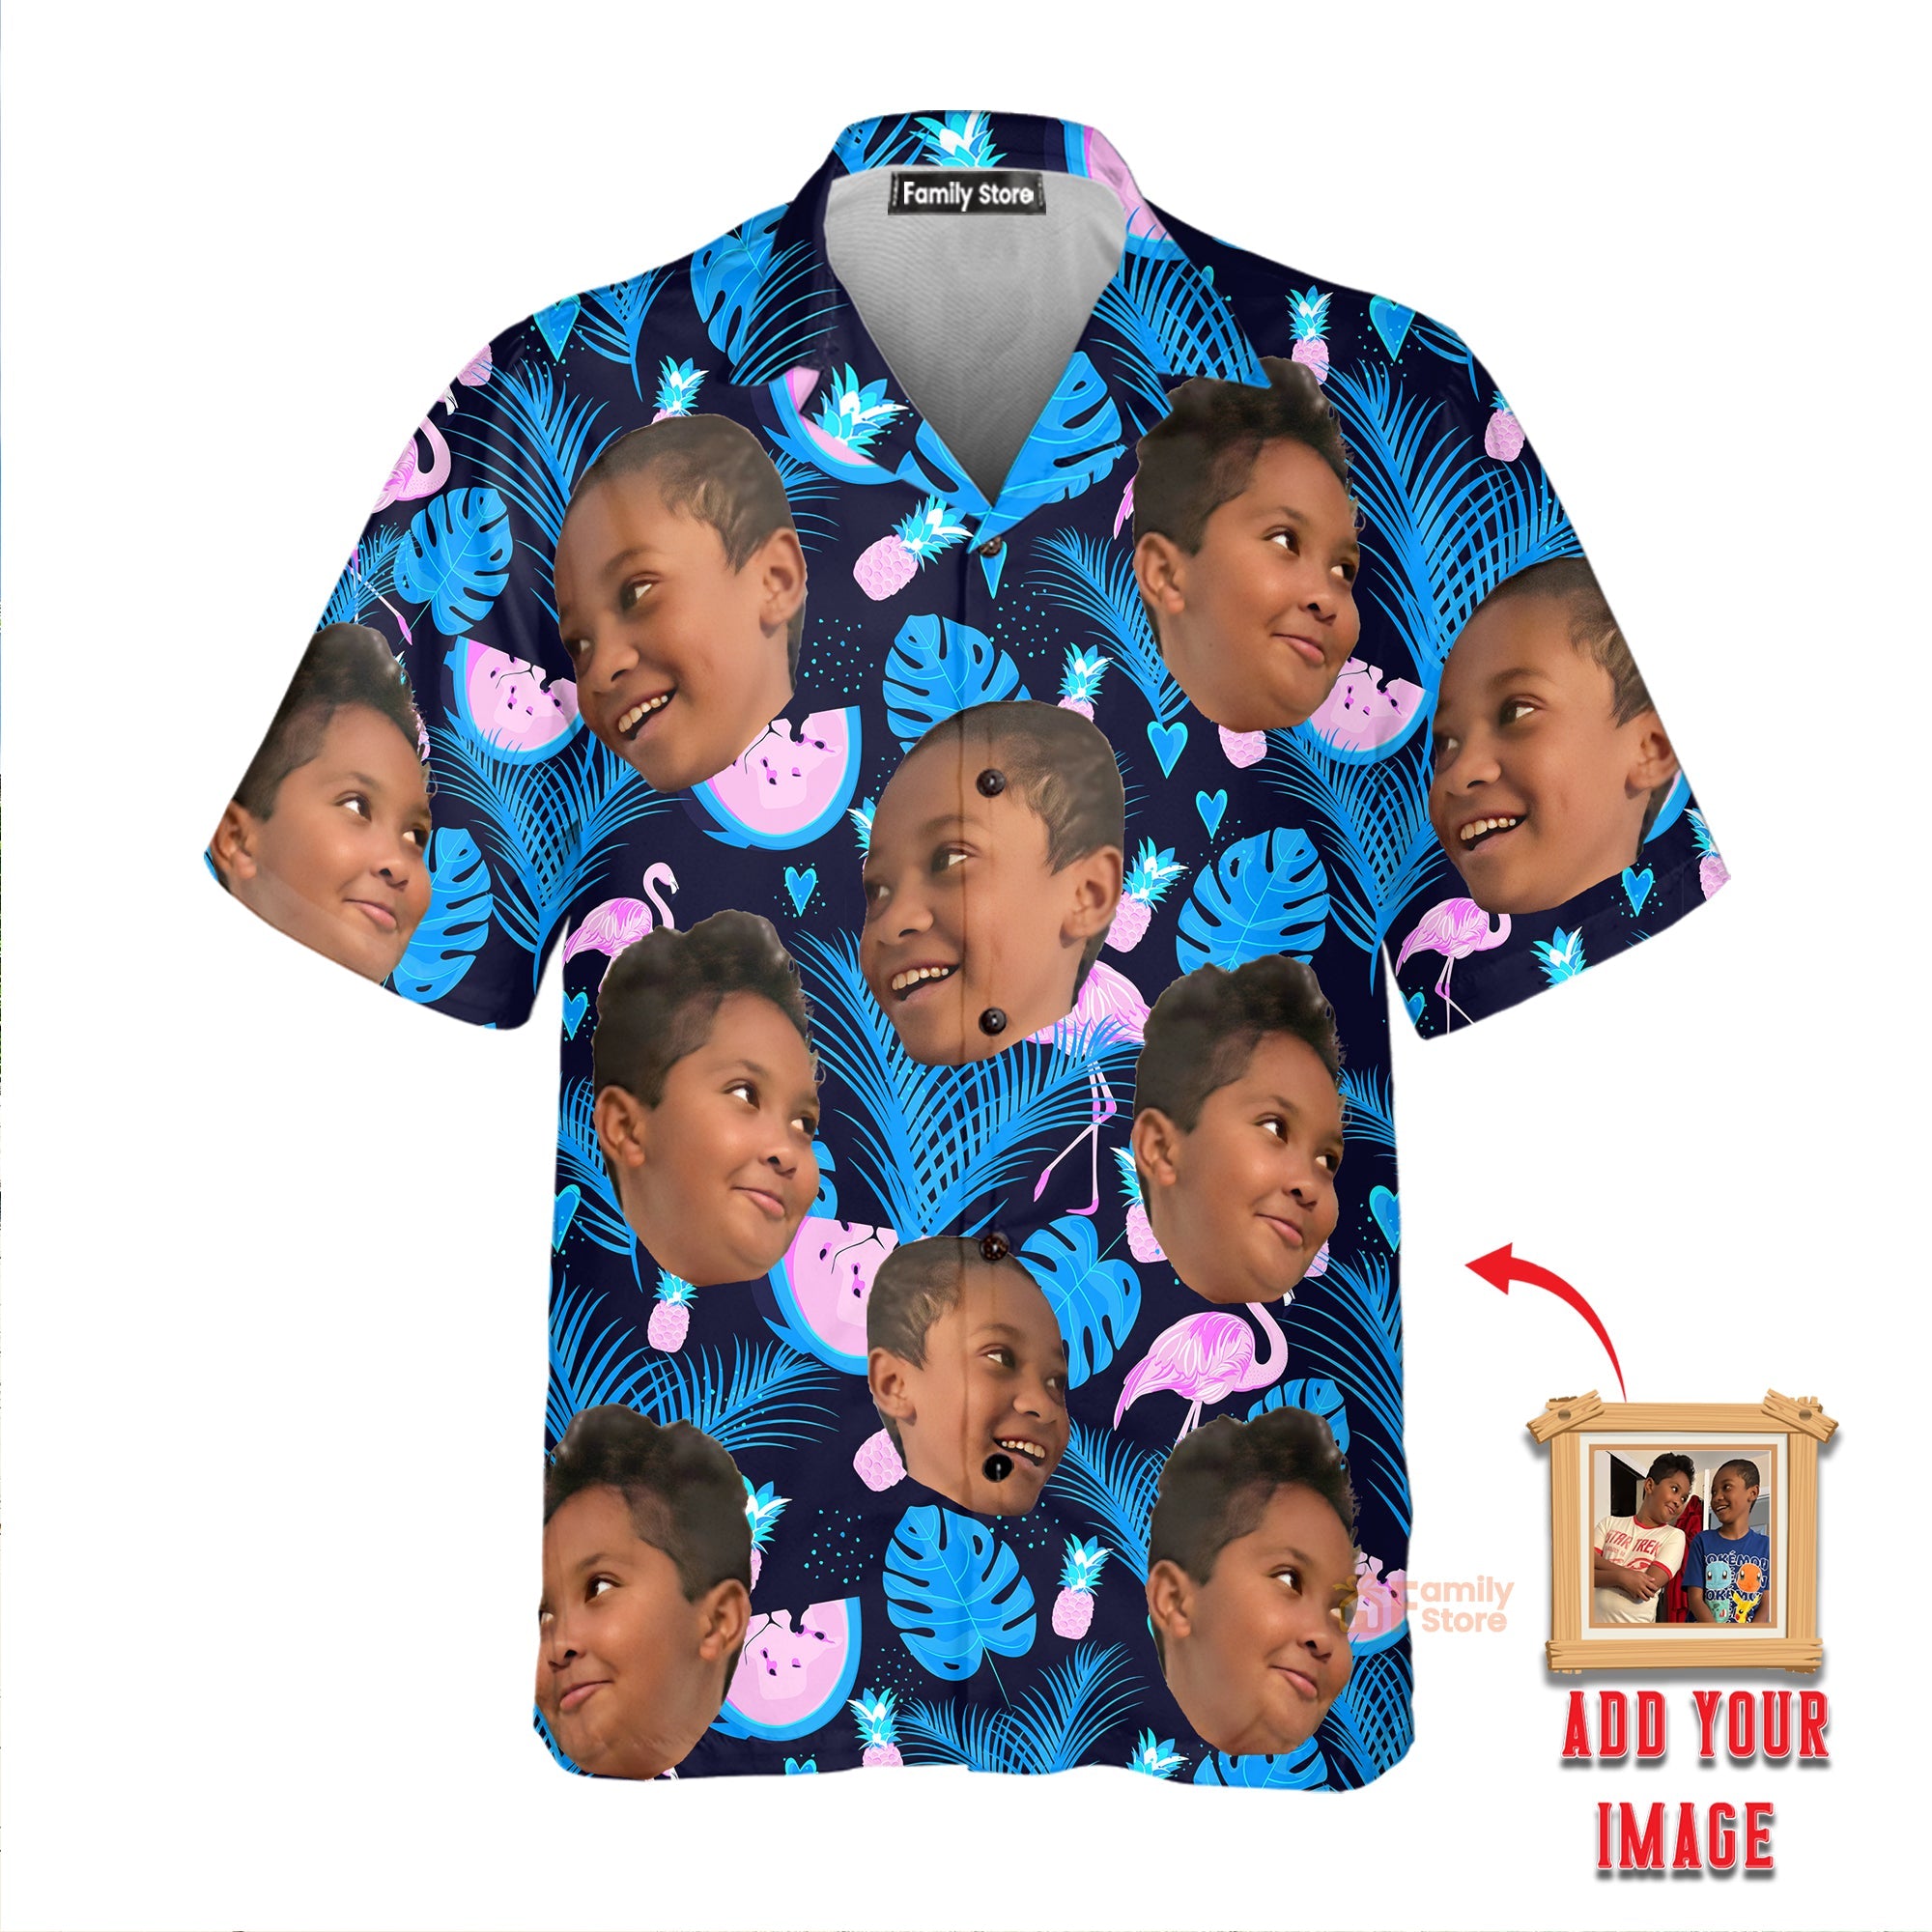 (Photo Inserted) Funny Face Neon Party Tropical Hawaiian Shirt